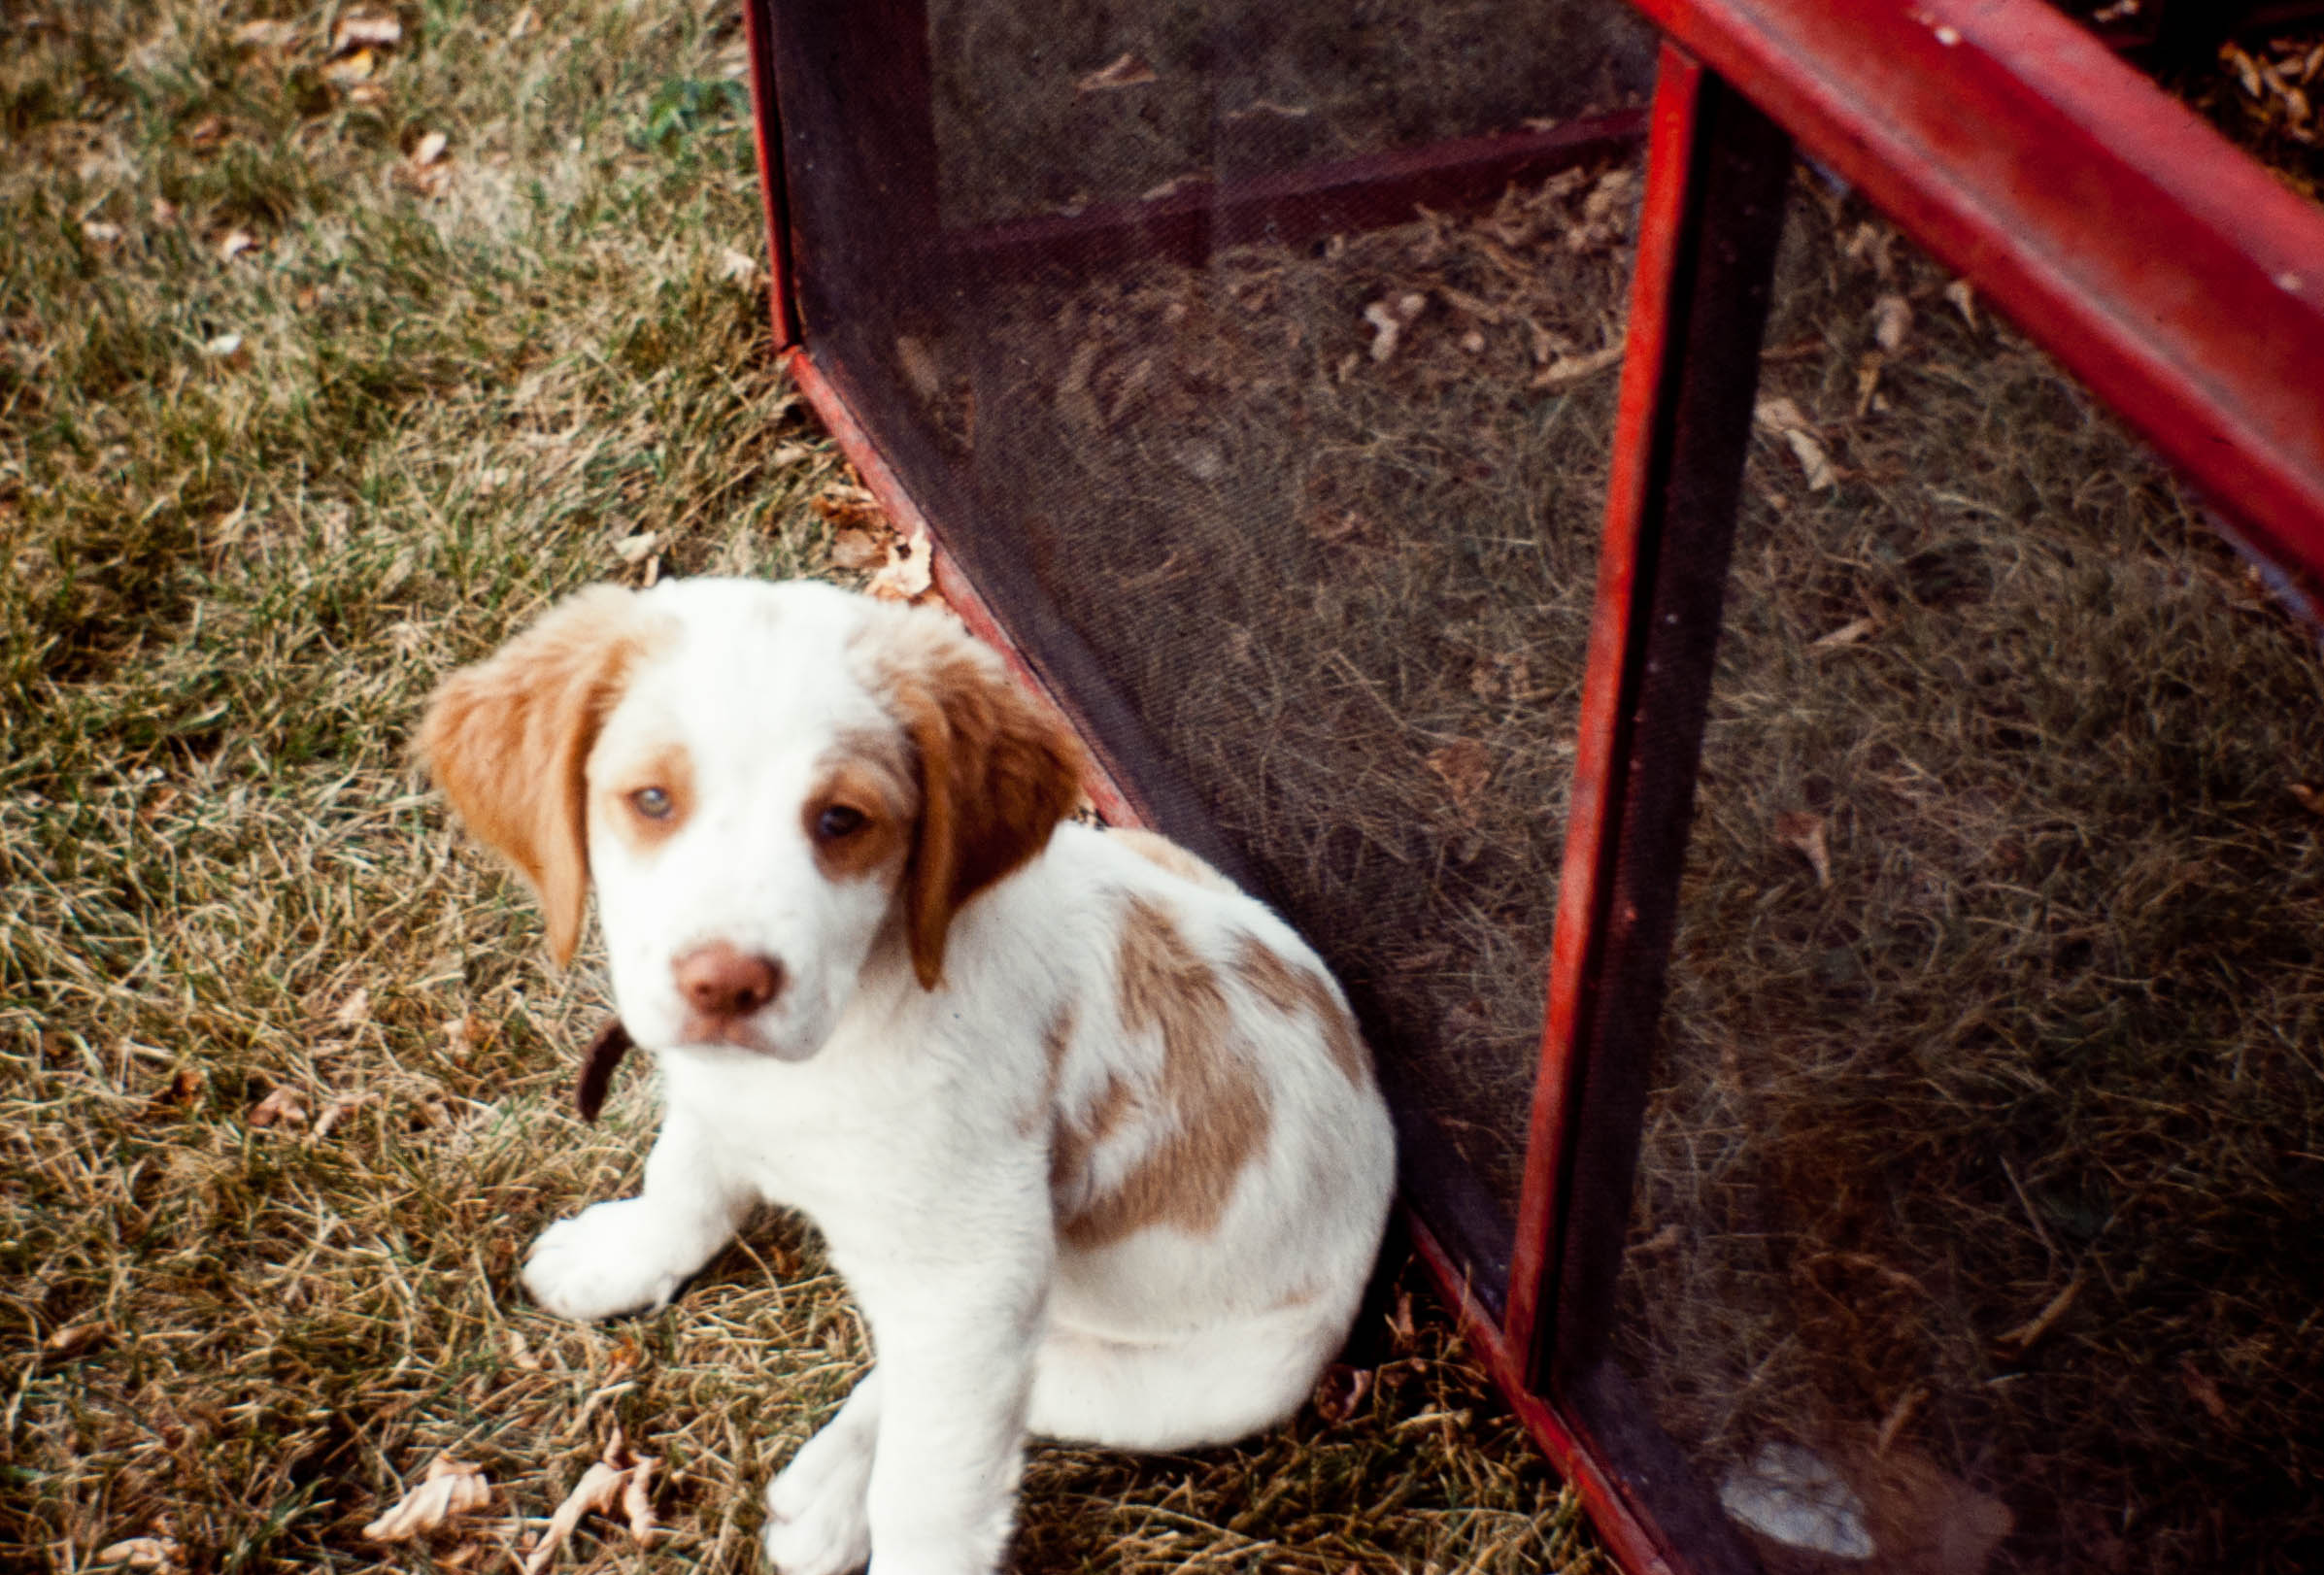 and white dog puppy sitting in grass.jpg - Wikimedia